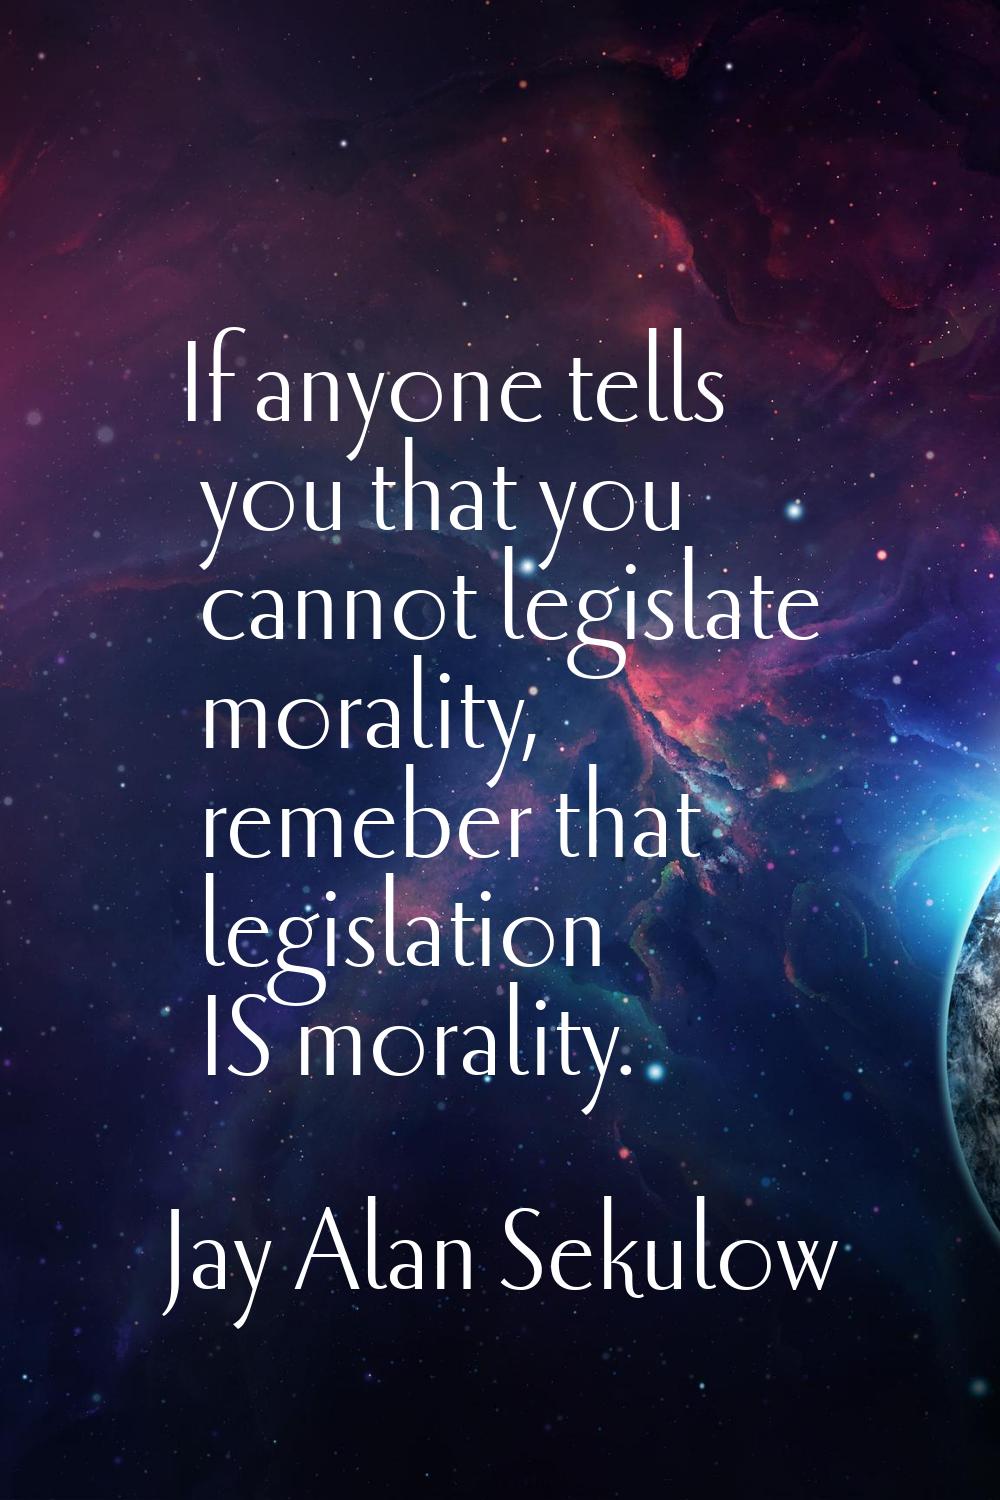 If anyone tells you that you cannot legislate morality, remeber that legislation IS morality.